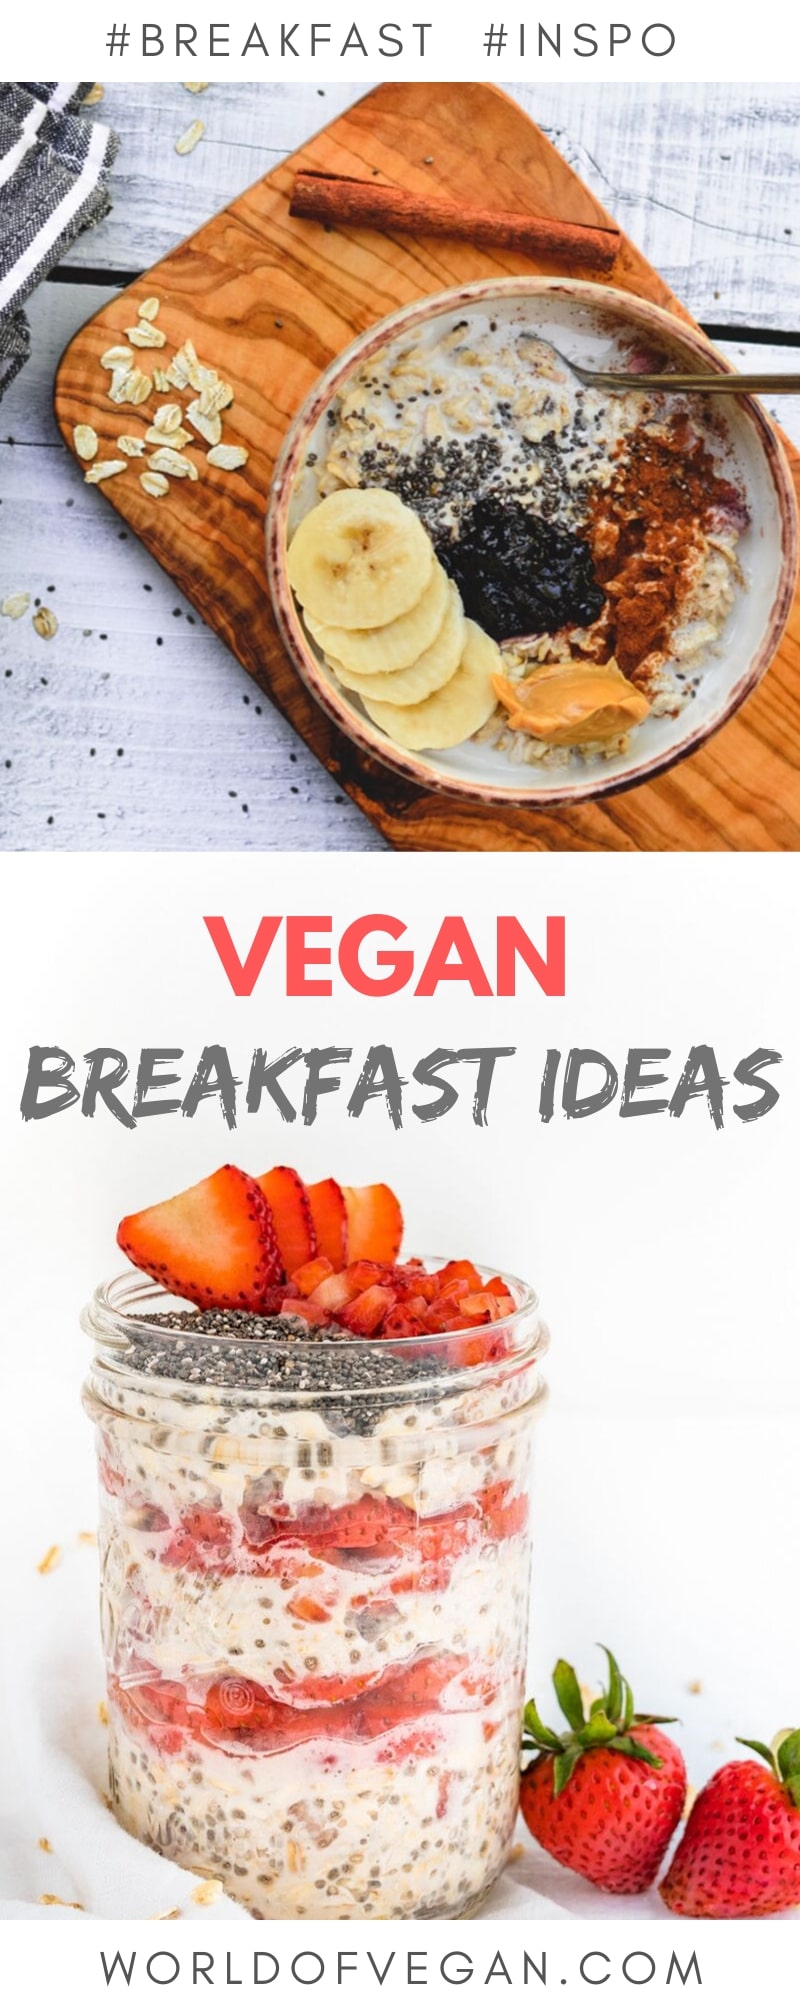 10 Easy Vegan Breakfast Ideas To Get Out of a Rut | WorldofVegan.com